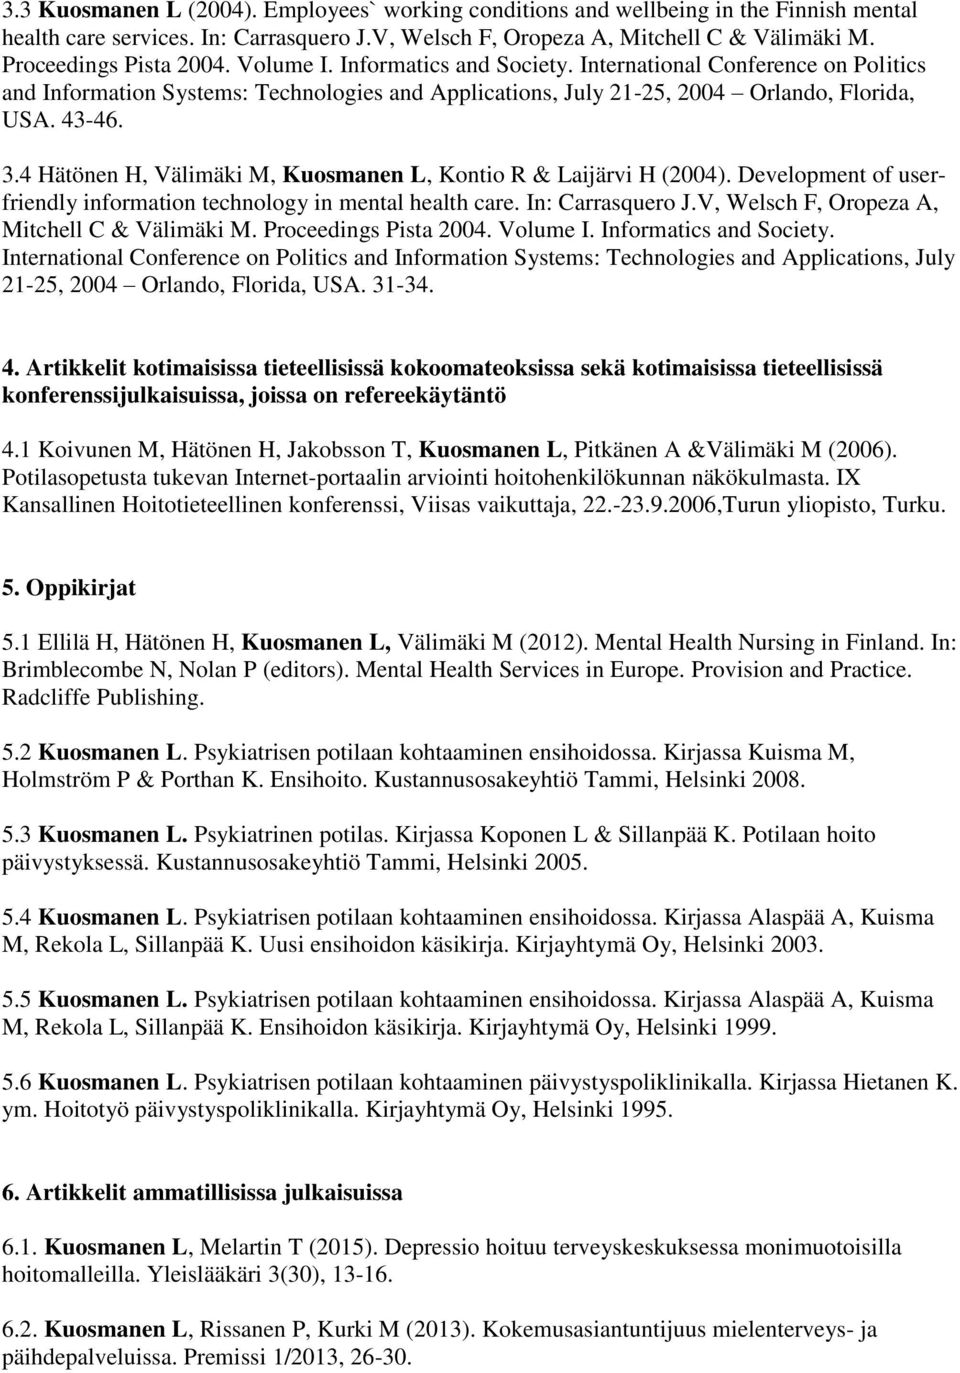 3.4 Hätönen H, Välimäki M, Kuosmanen L, Kontio R & Laijärvi H (2004). Development of userfriendly information technology in mental health care. In: Carrasquero J.